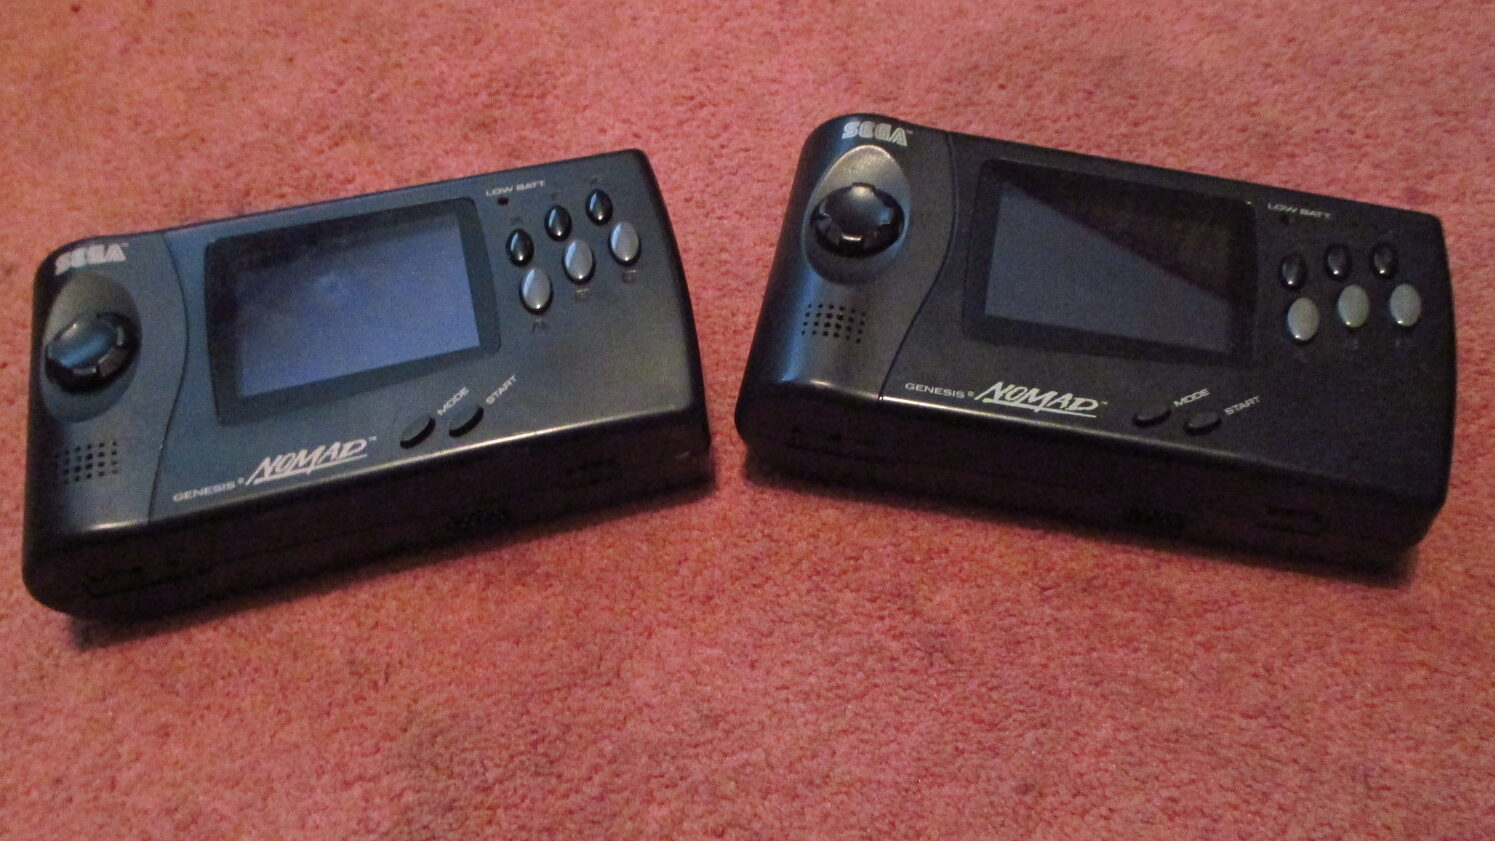 My two Sega Nomad handheld game consoles.